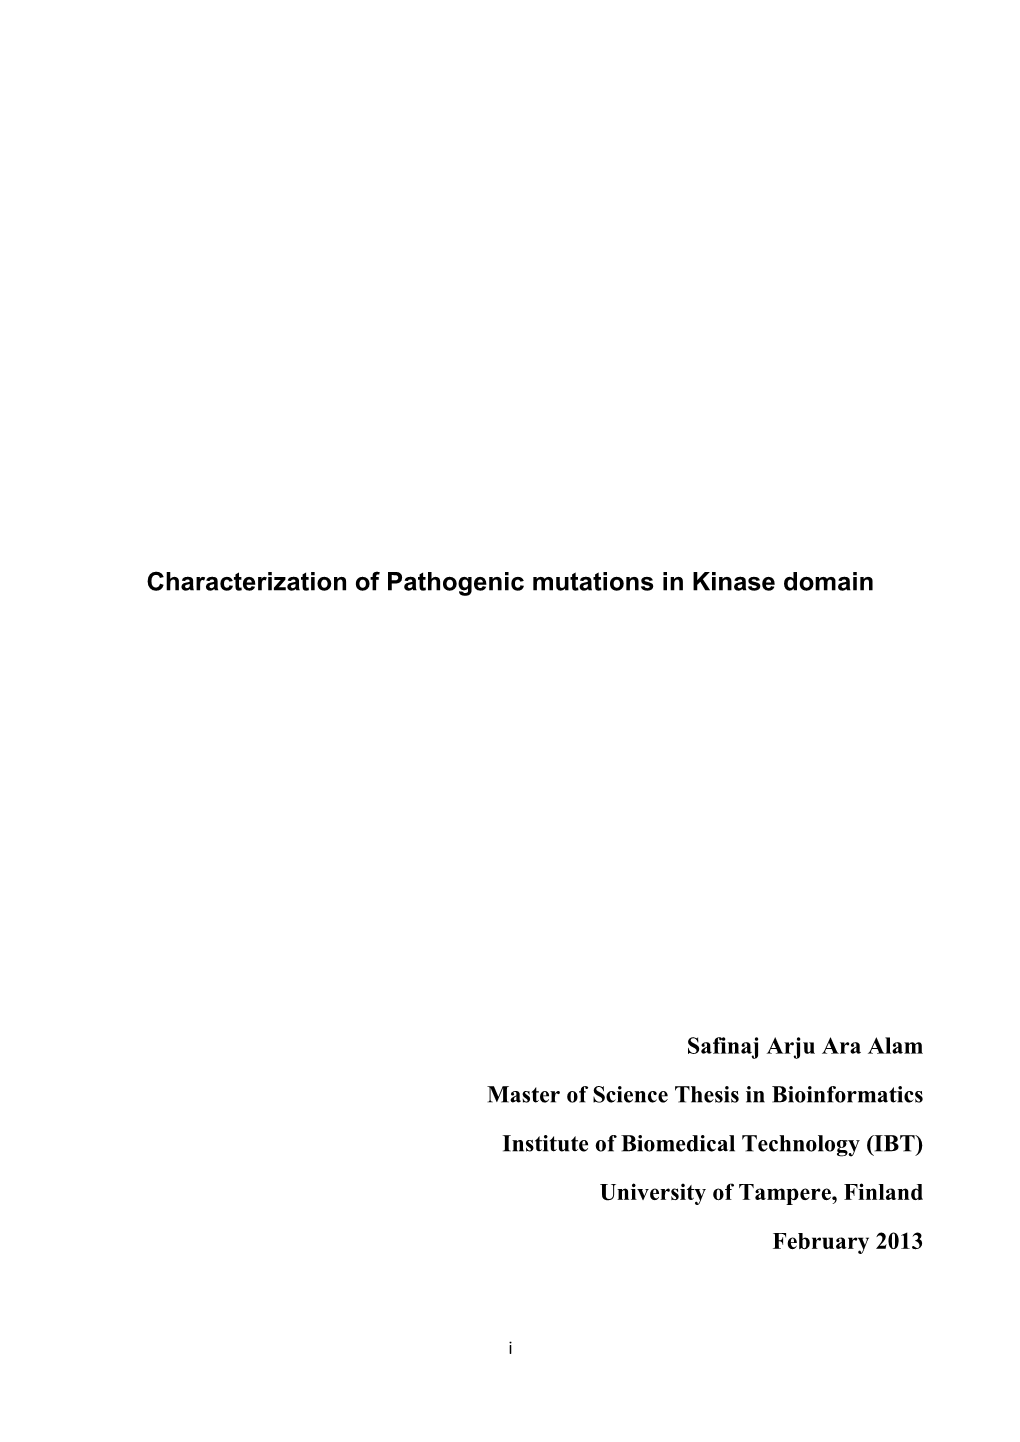 Characterization of Pathogenic Mutations in Kinase Domain